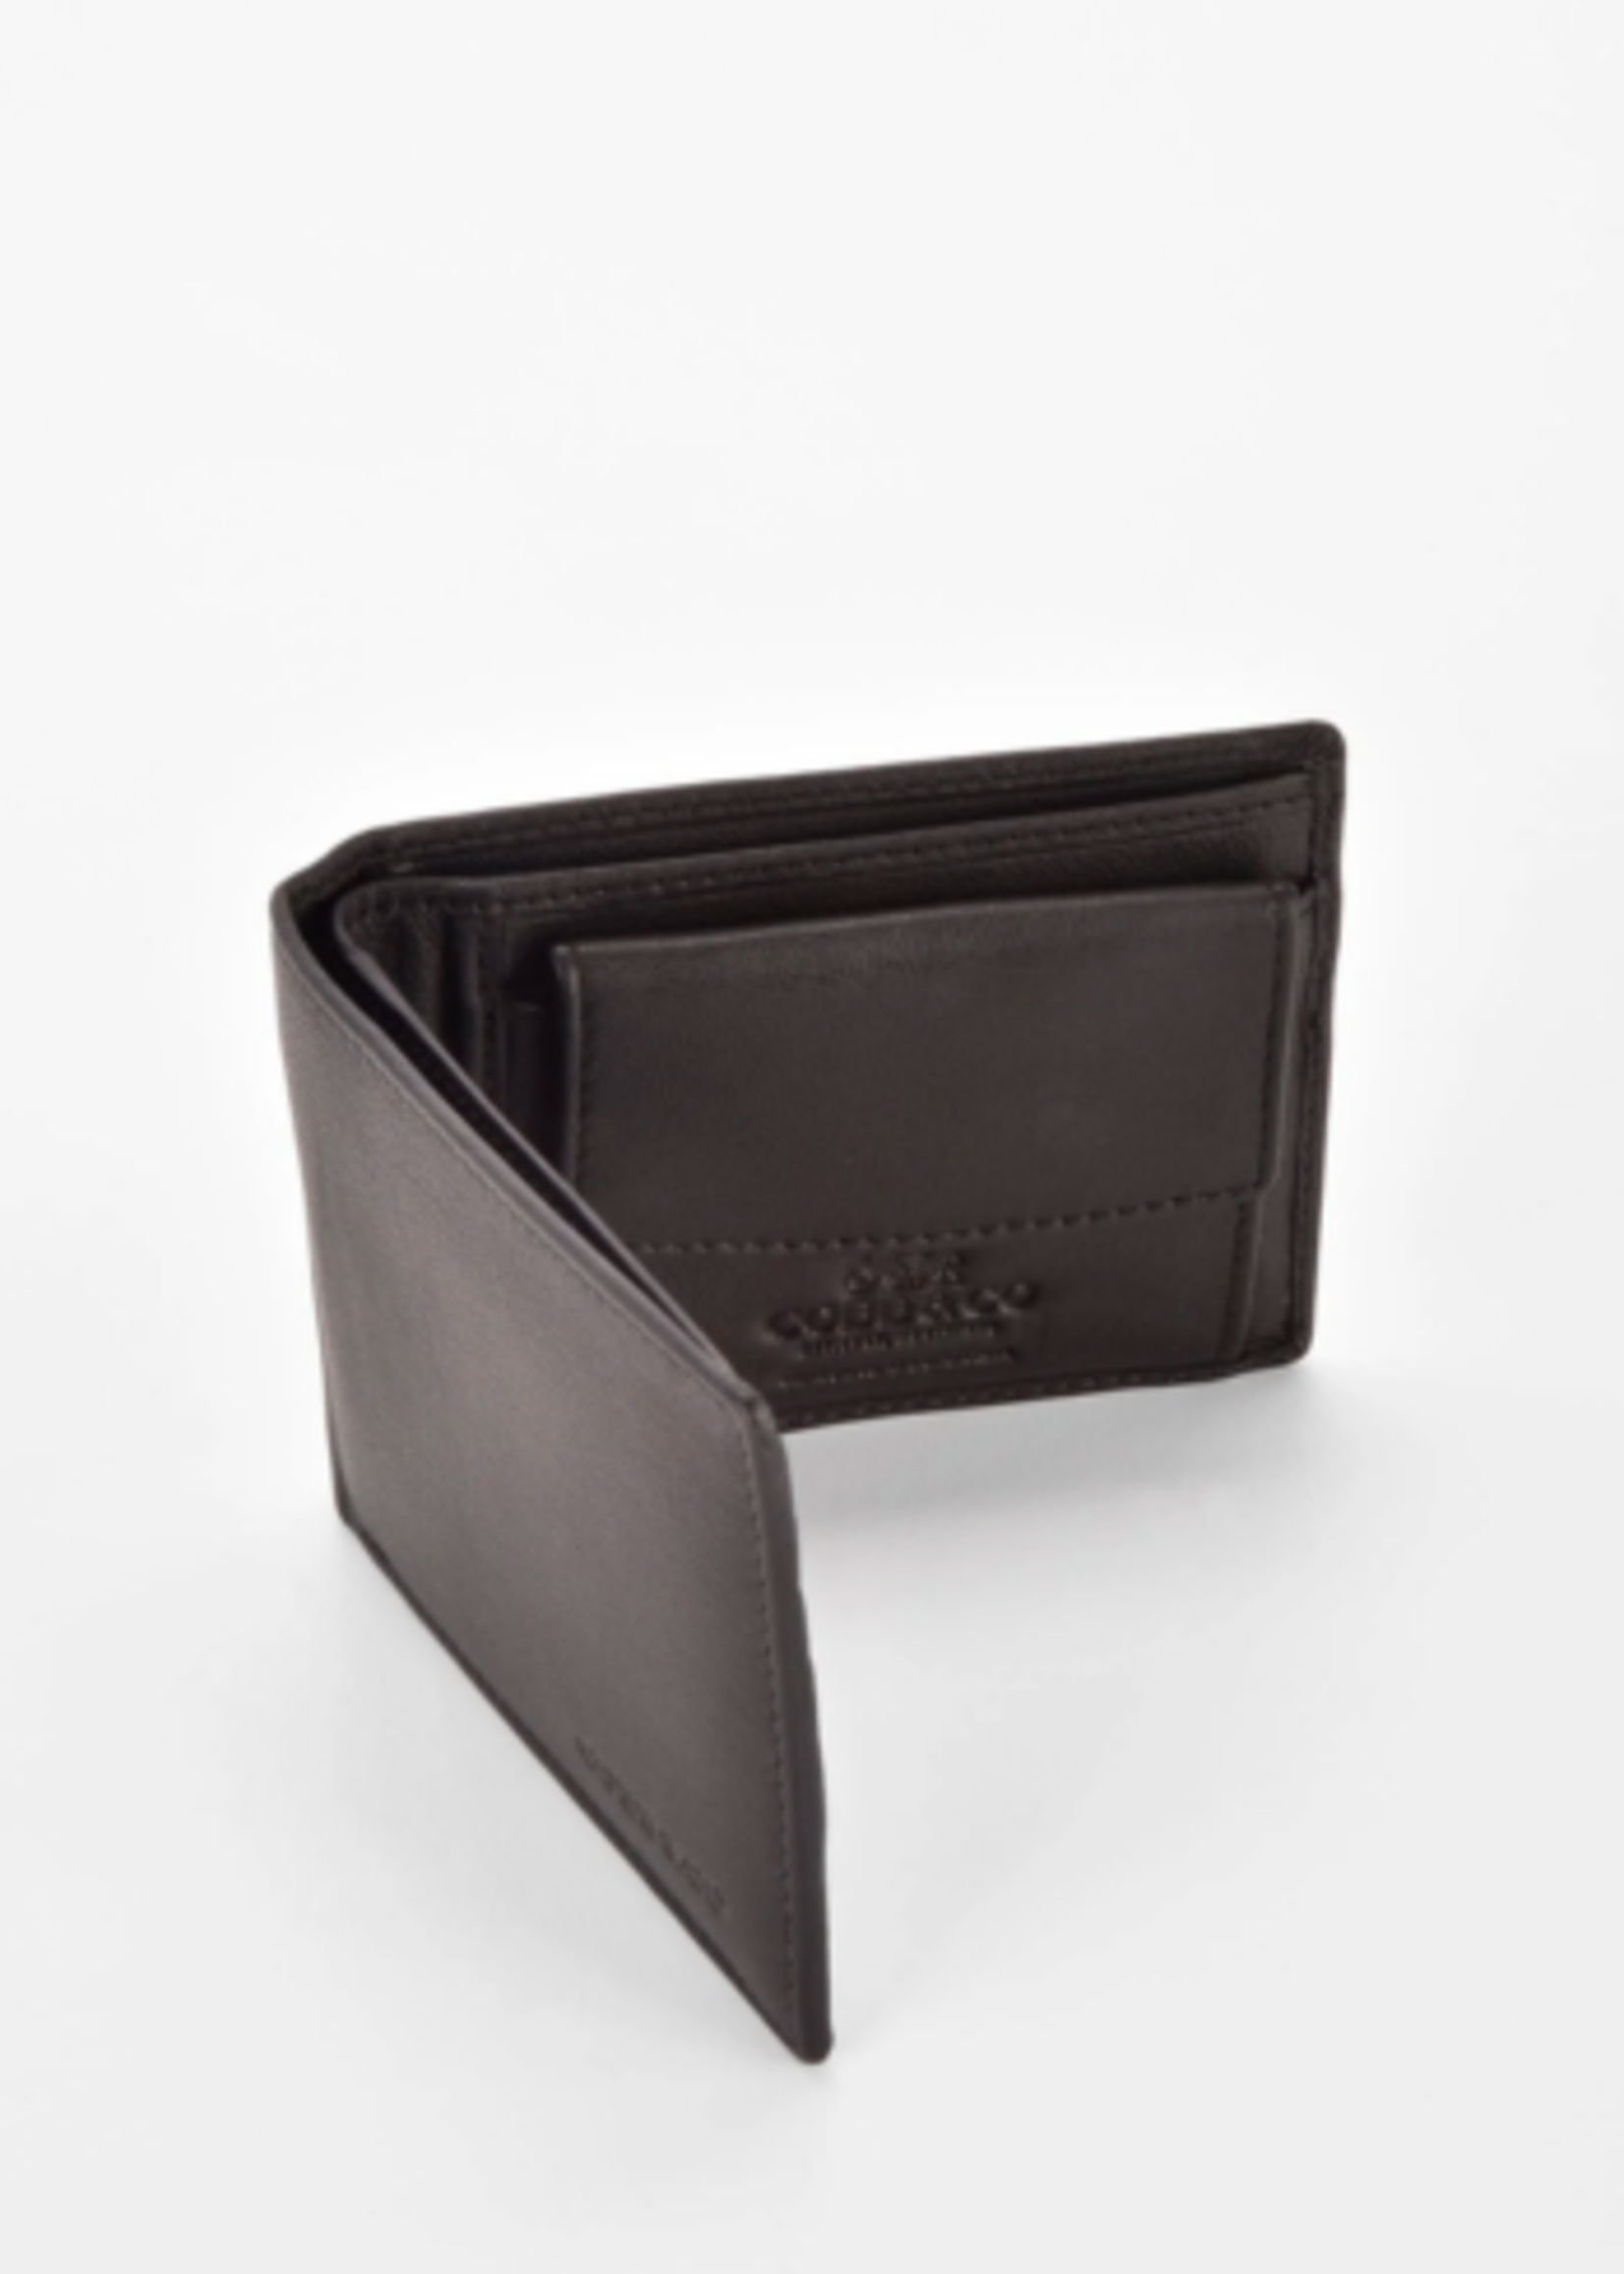 Langdon RFID Leather Men's Wallet